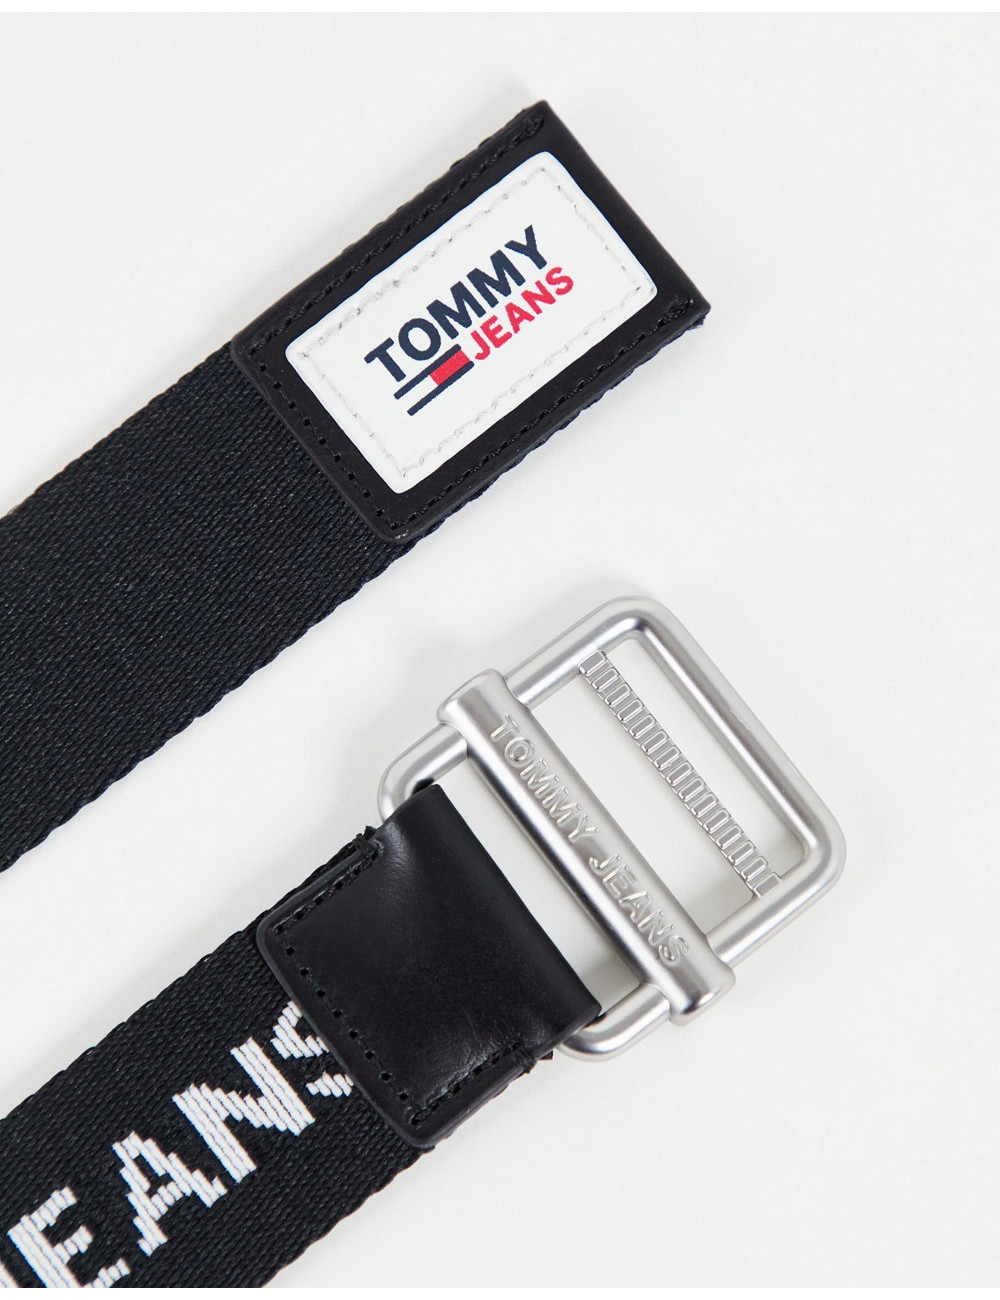 Tommy Jeans webbed belt...